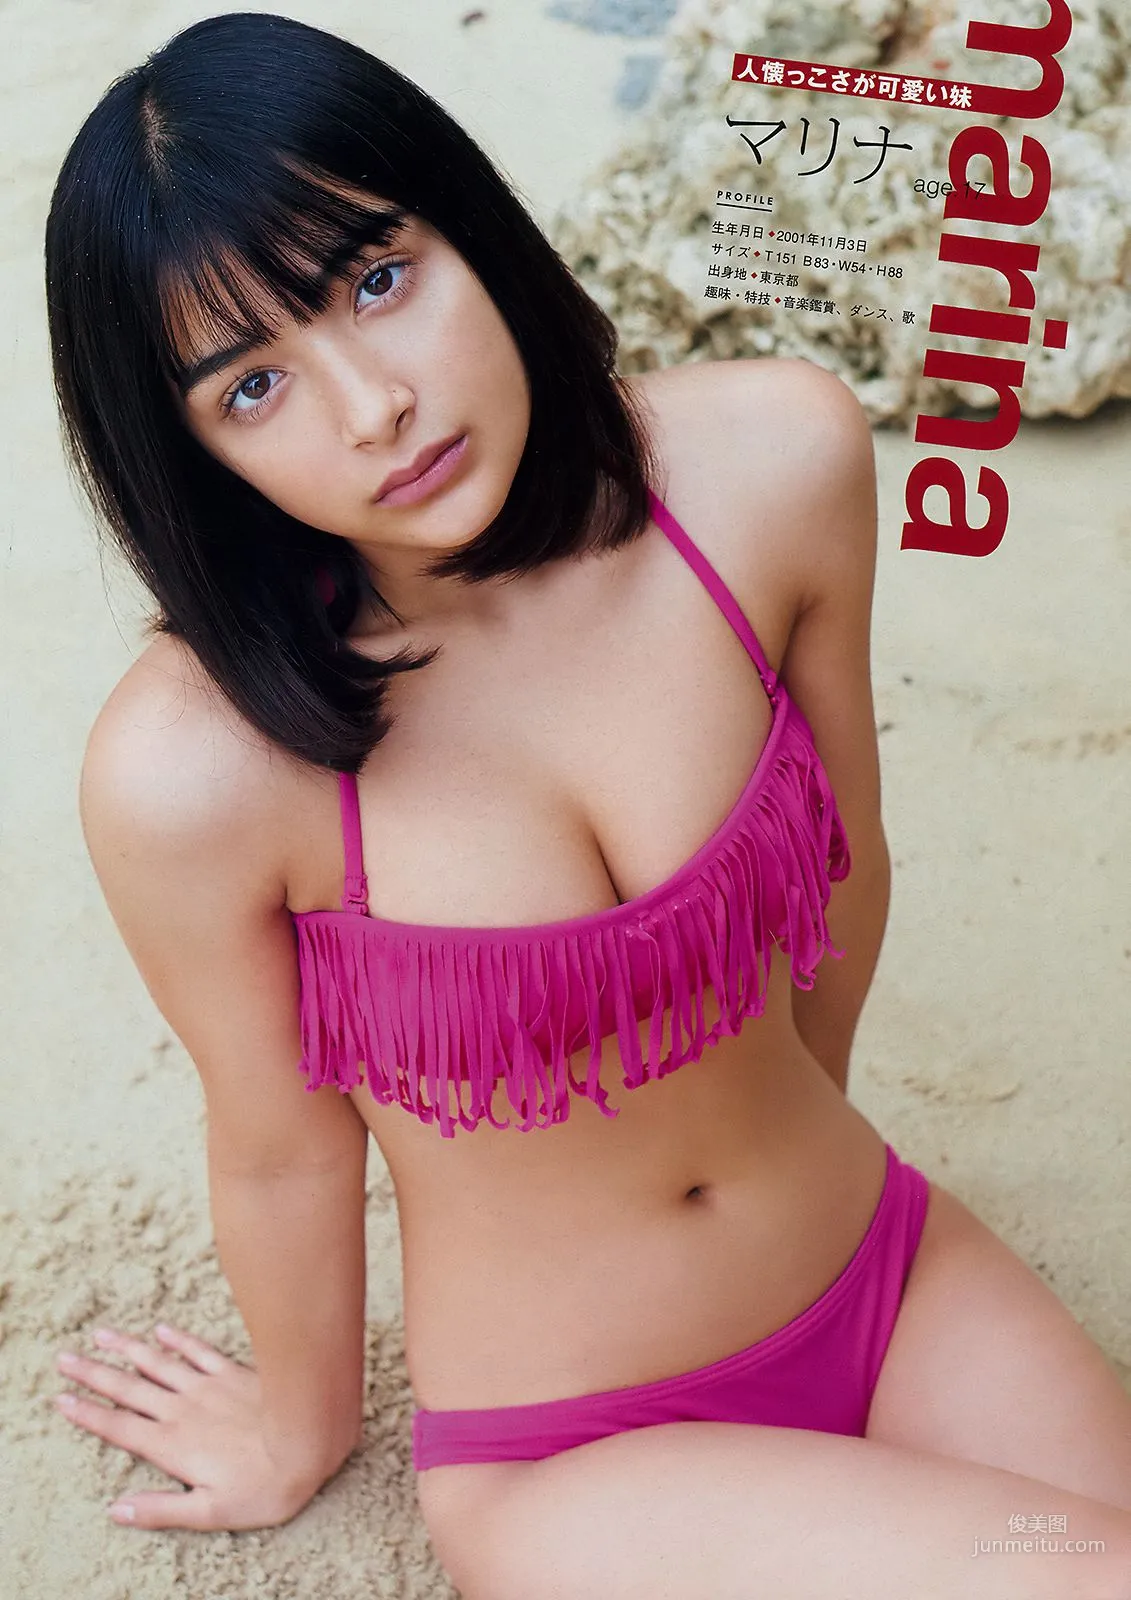 [Young Magazine] エリカ・マリナ姉妹 高橋かな 2019年No.01 写真杂志6